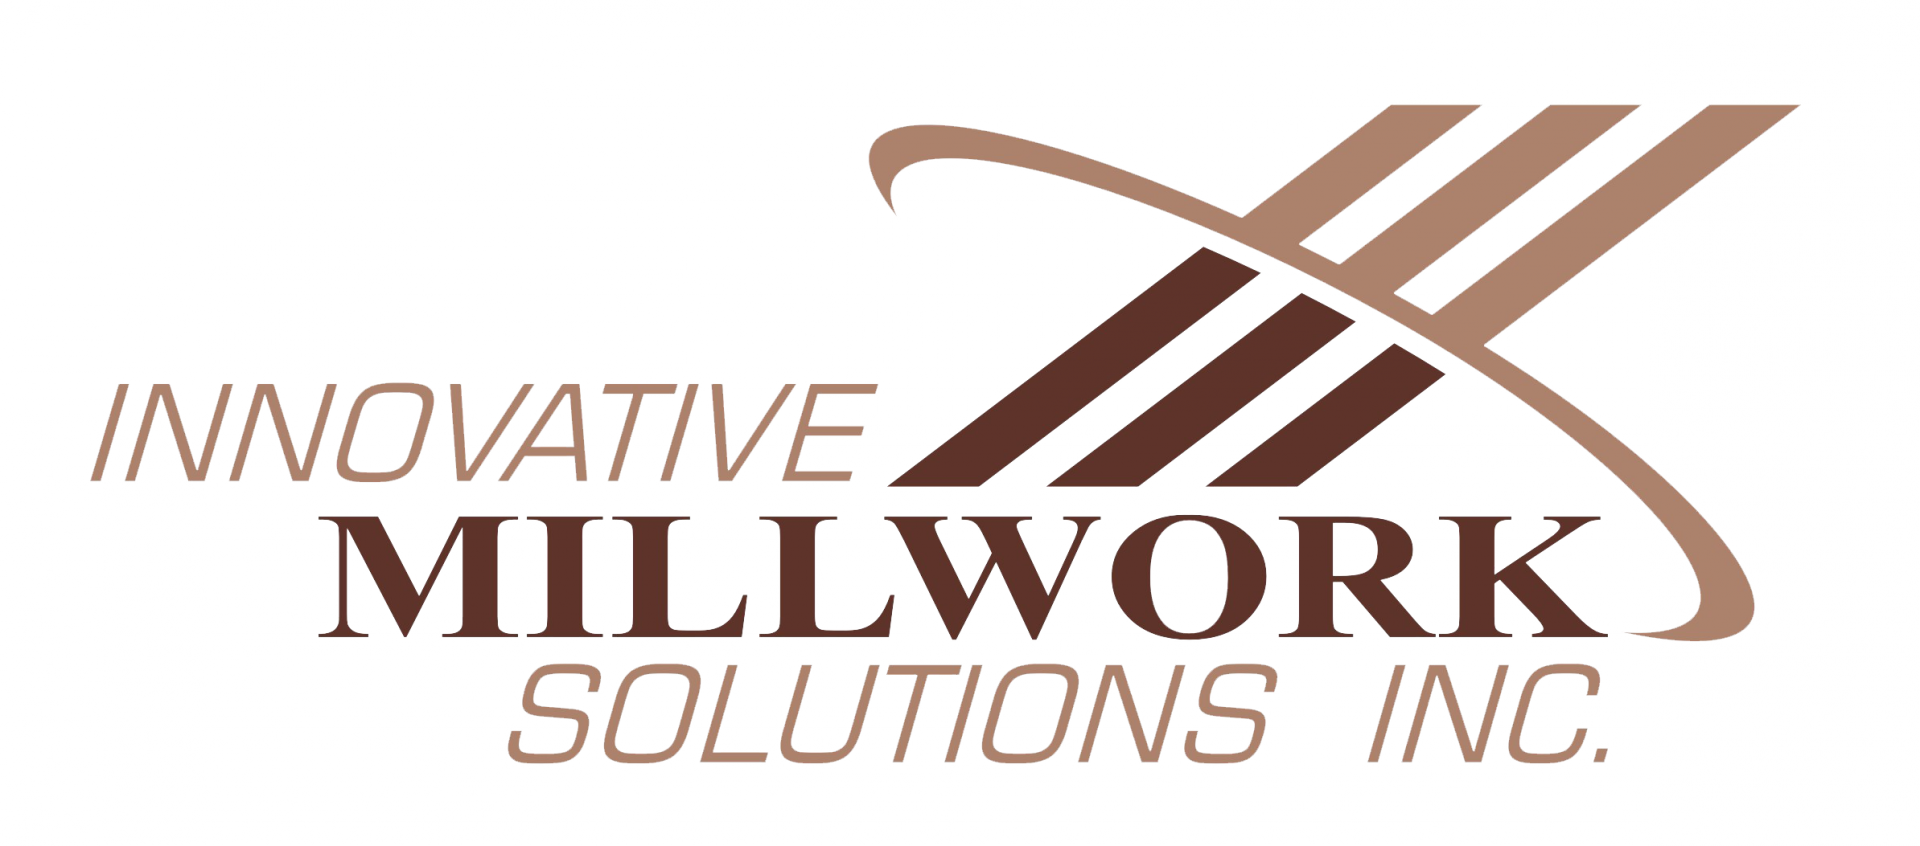 Innovative Millwork Solutions Inc